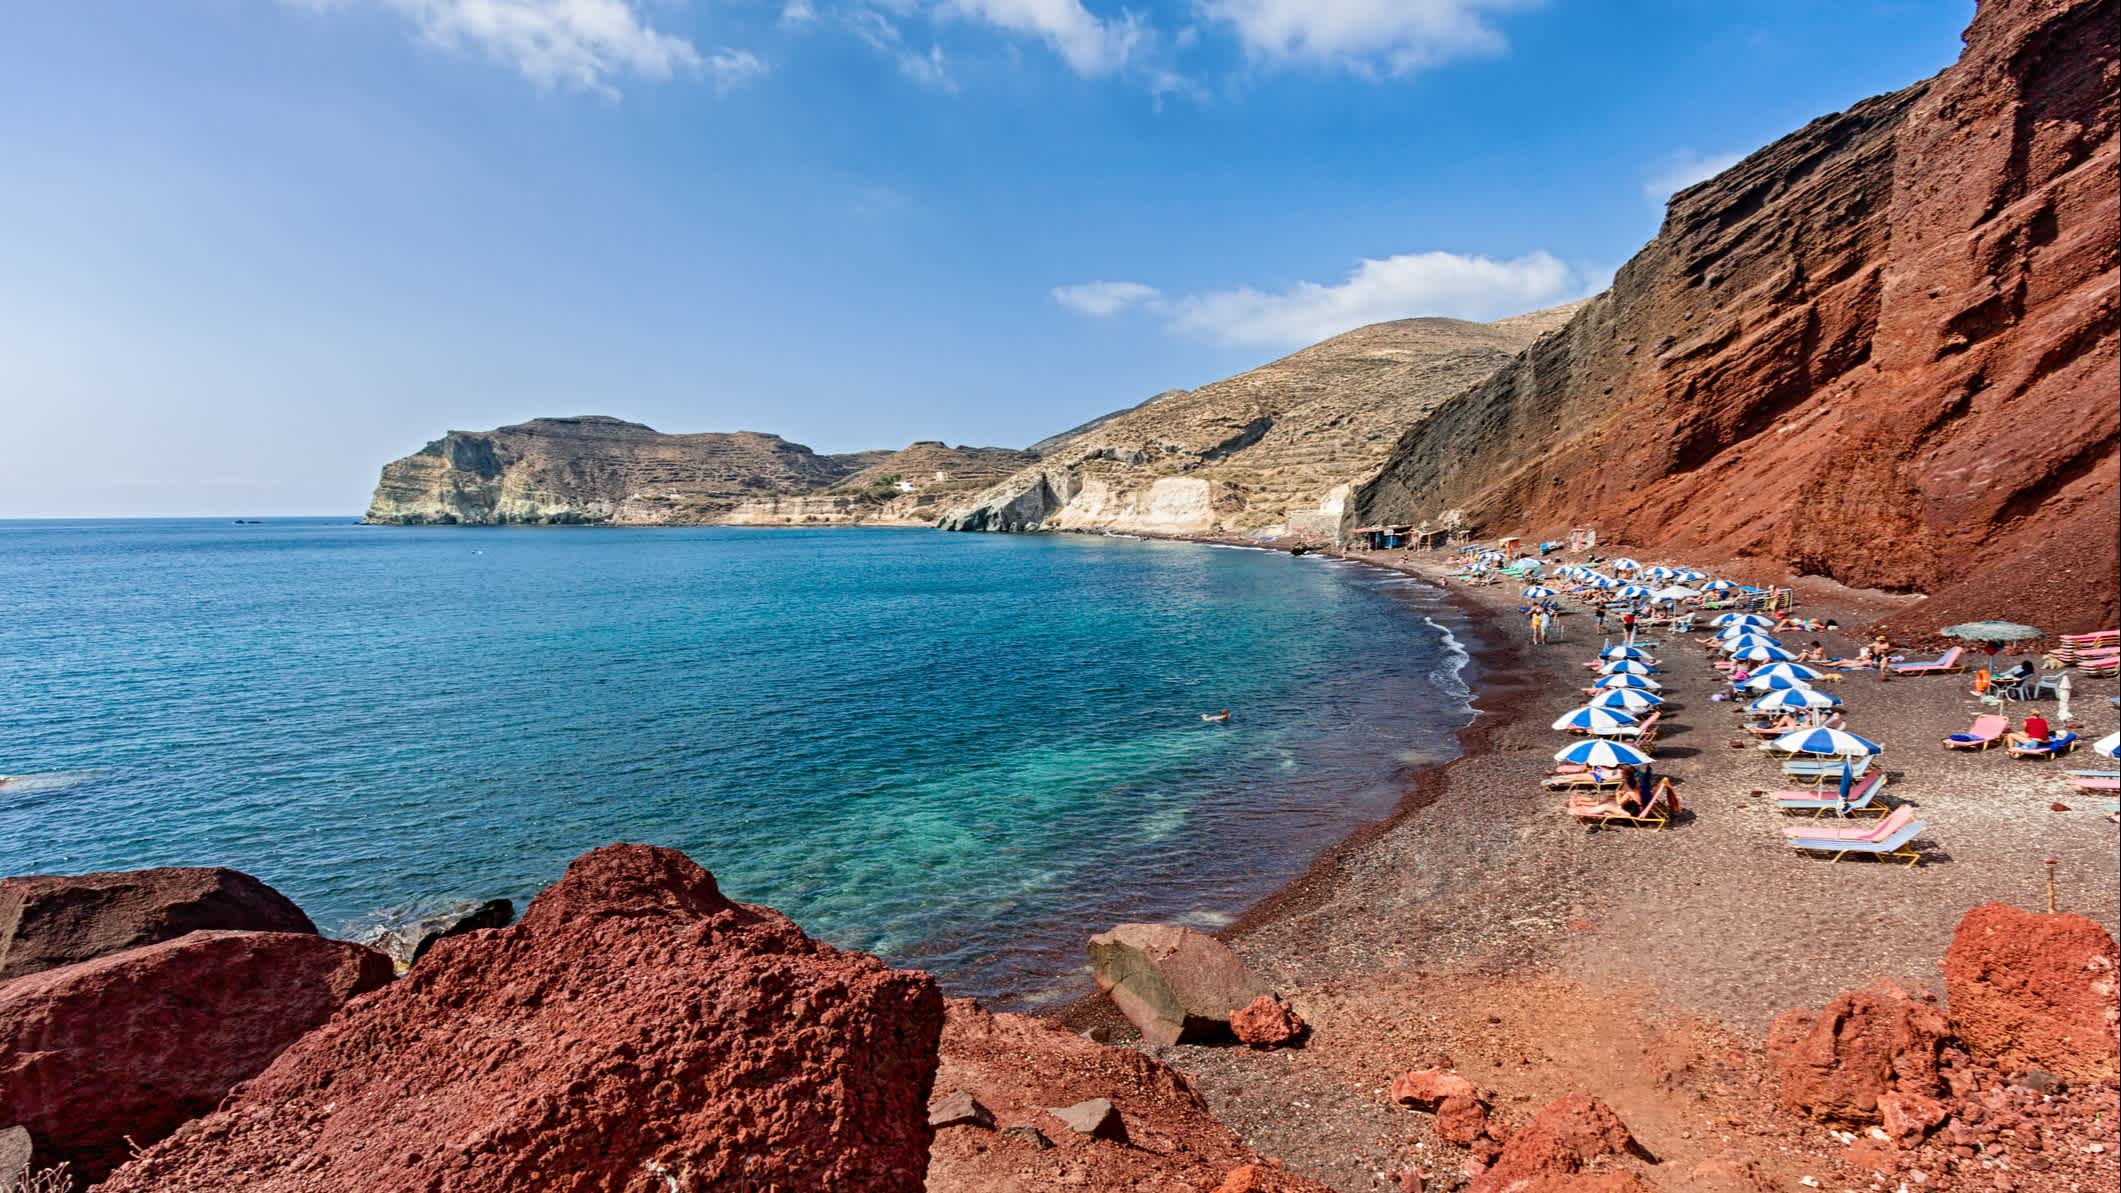 Blick auf den berühmten Roten Strand, Santorini, Griechenland.

